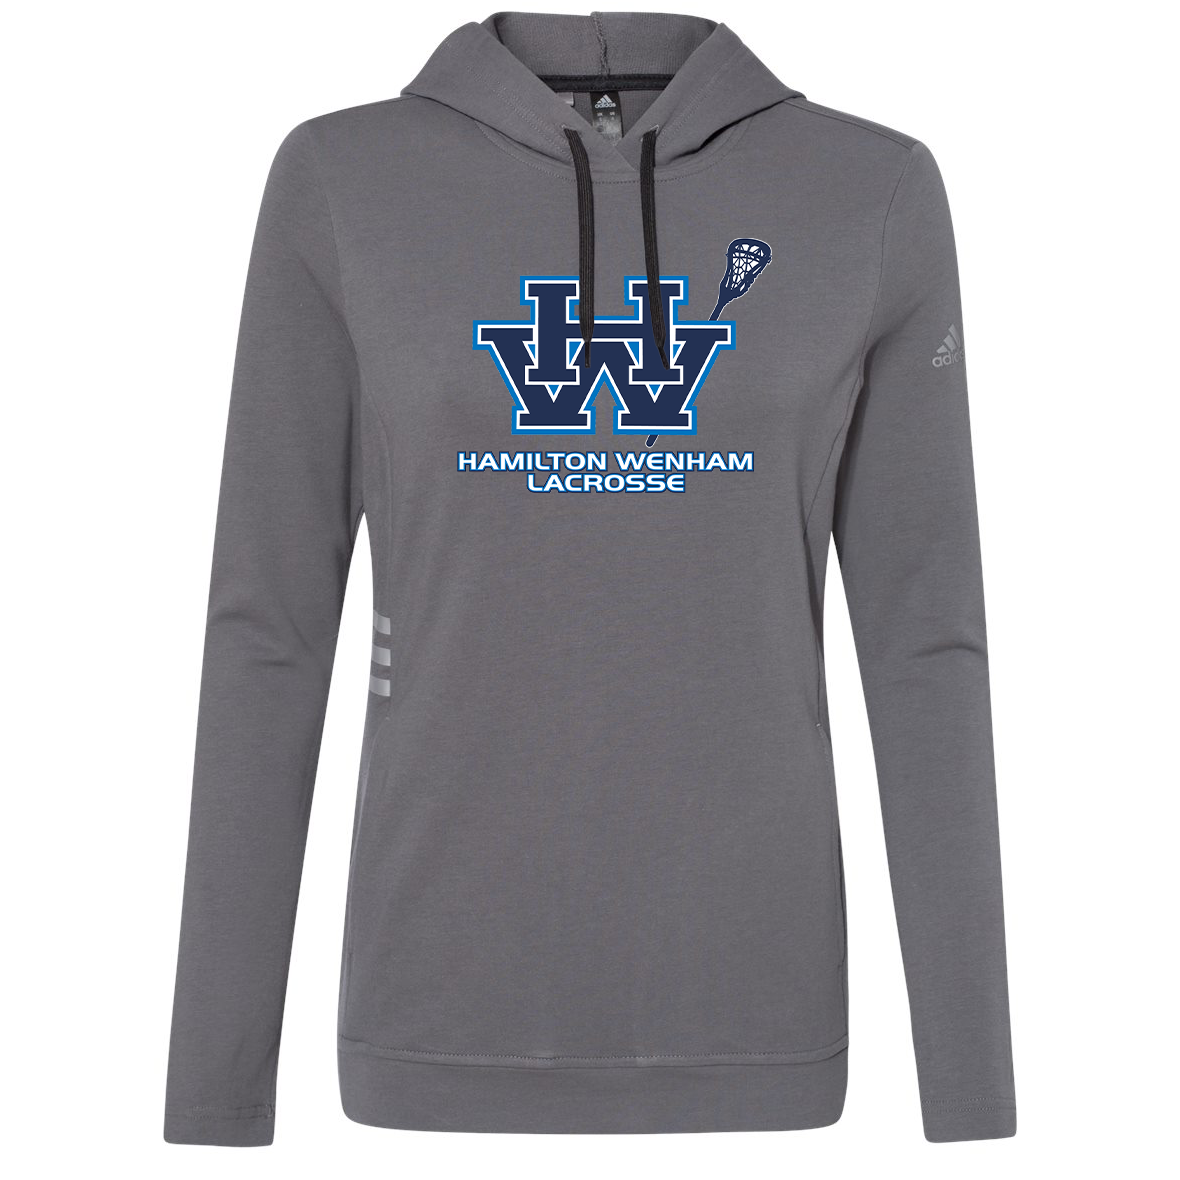 Hamilton Wenham Lacrosse Adidas Women's Sweatshirt